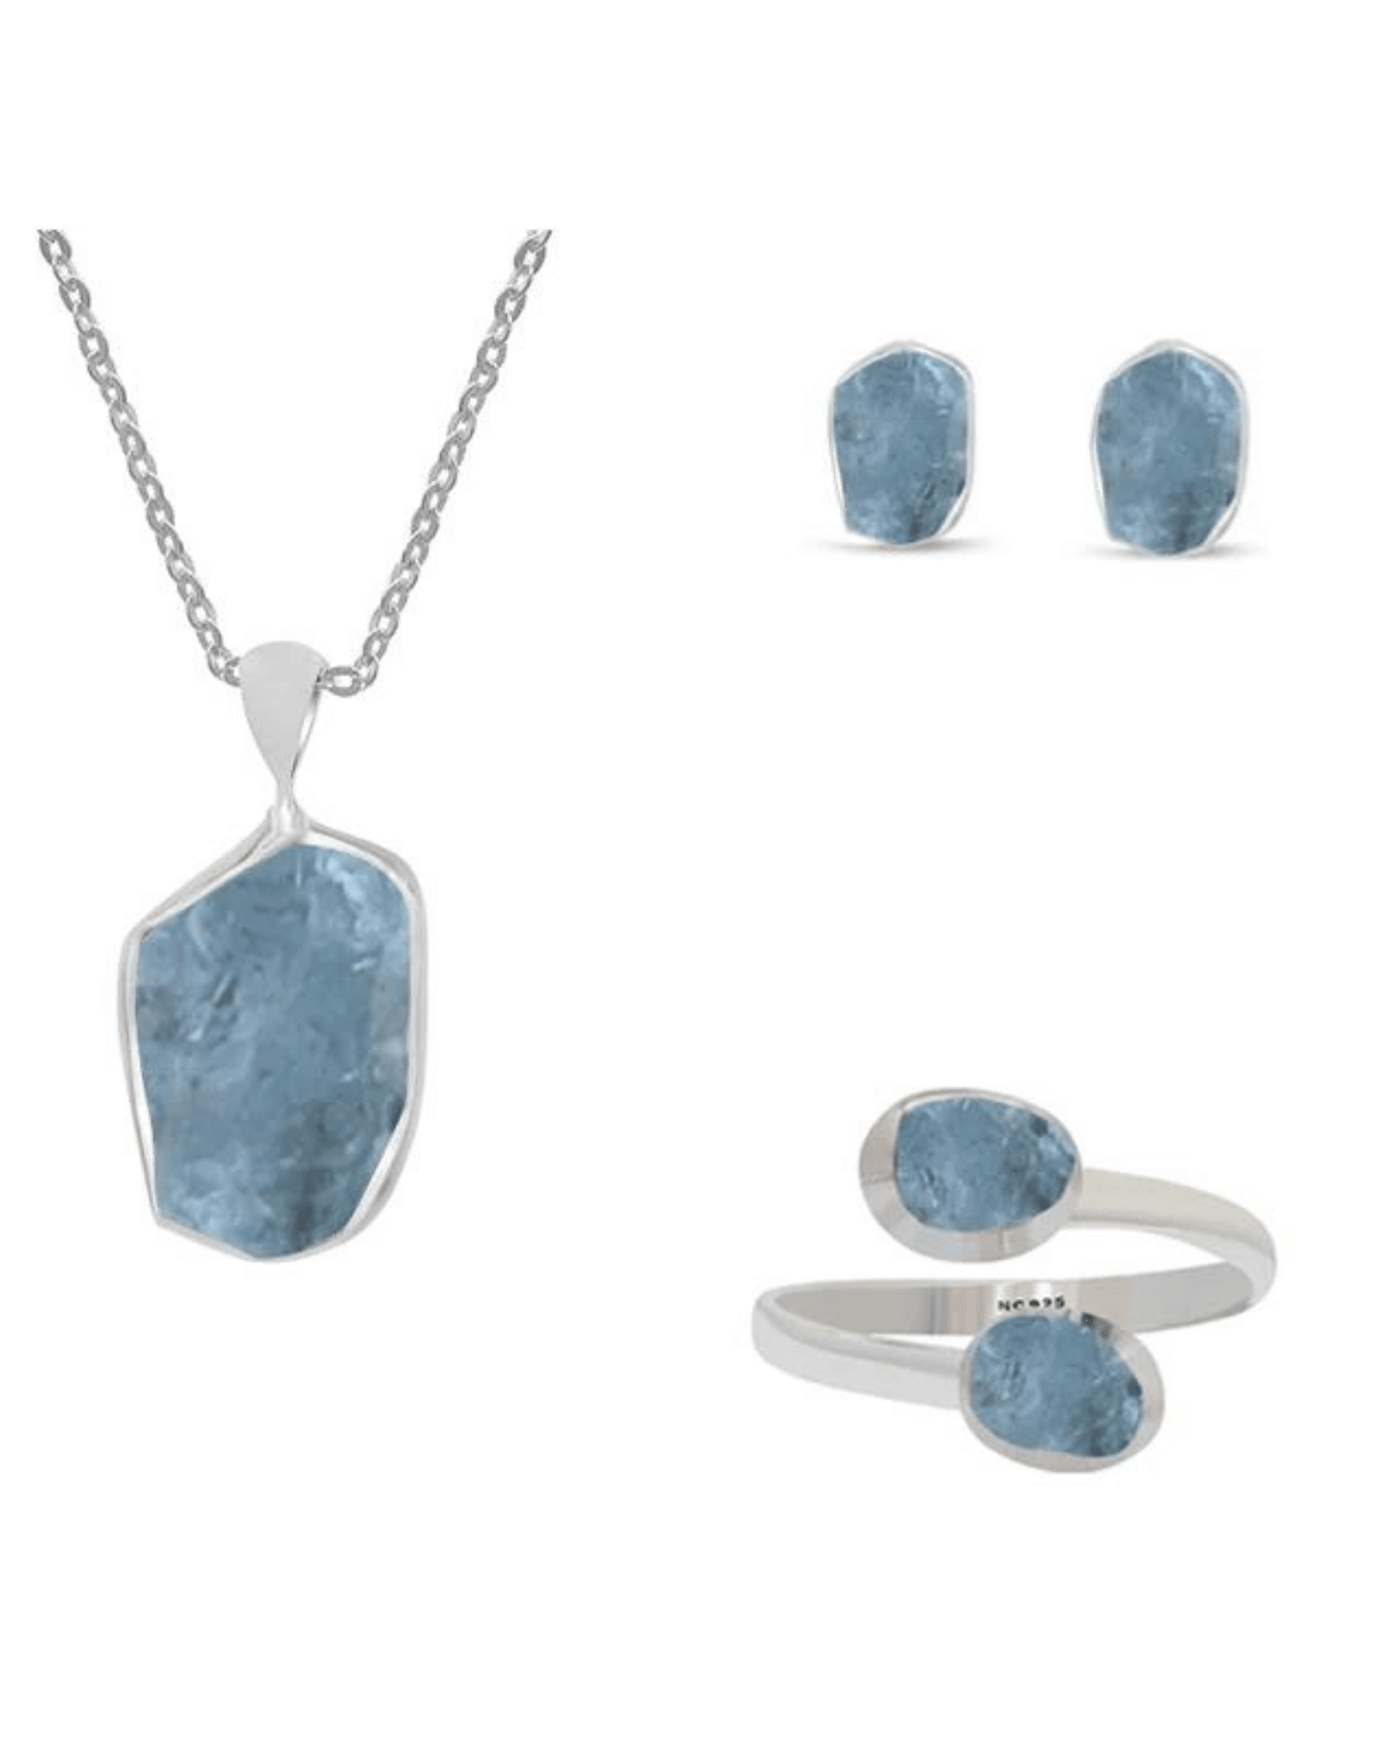 Aquamarine Jewellery Silver Gift Set 925